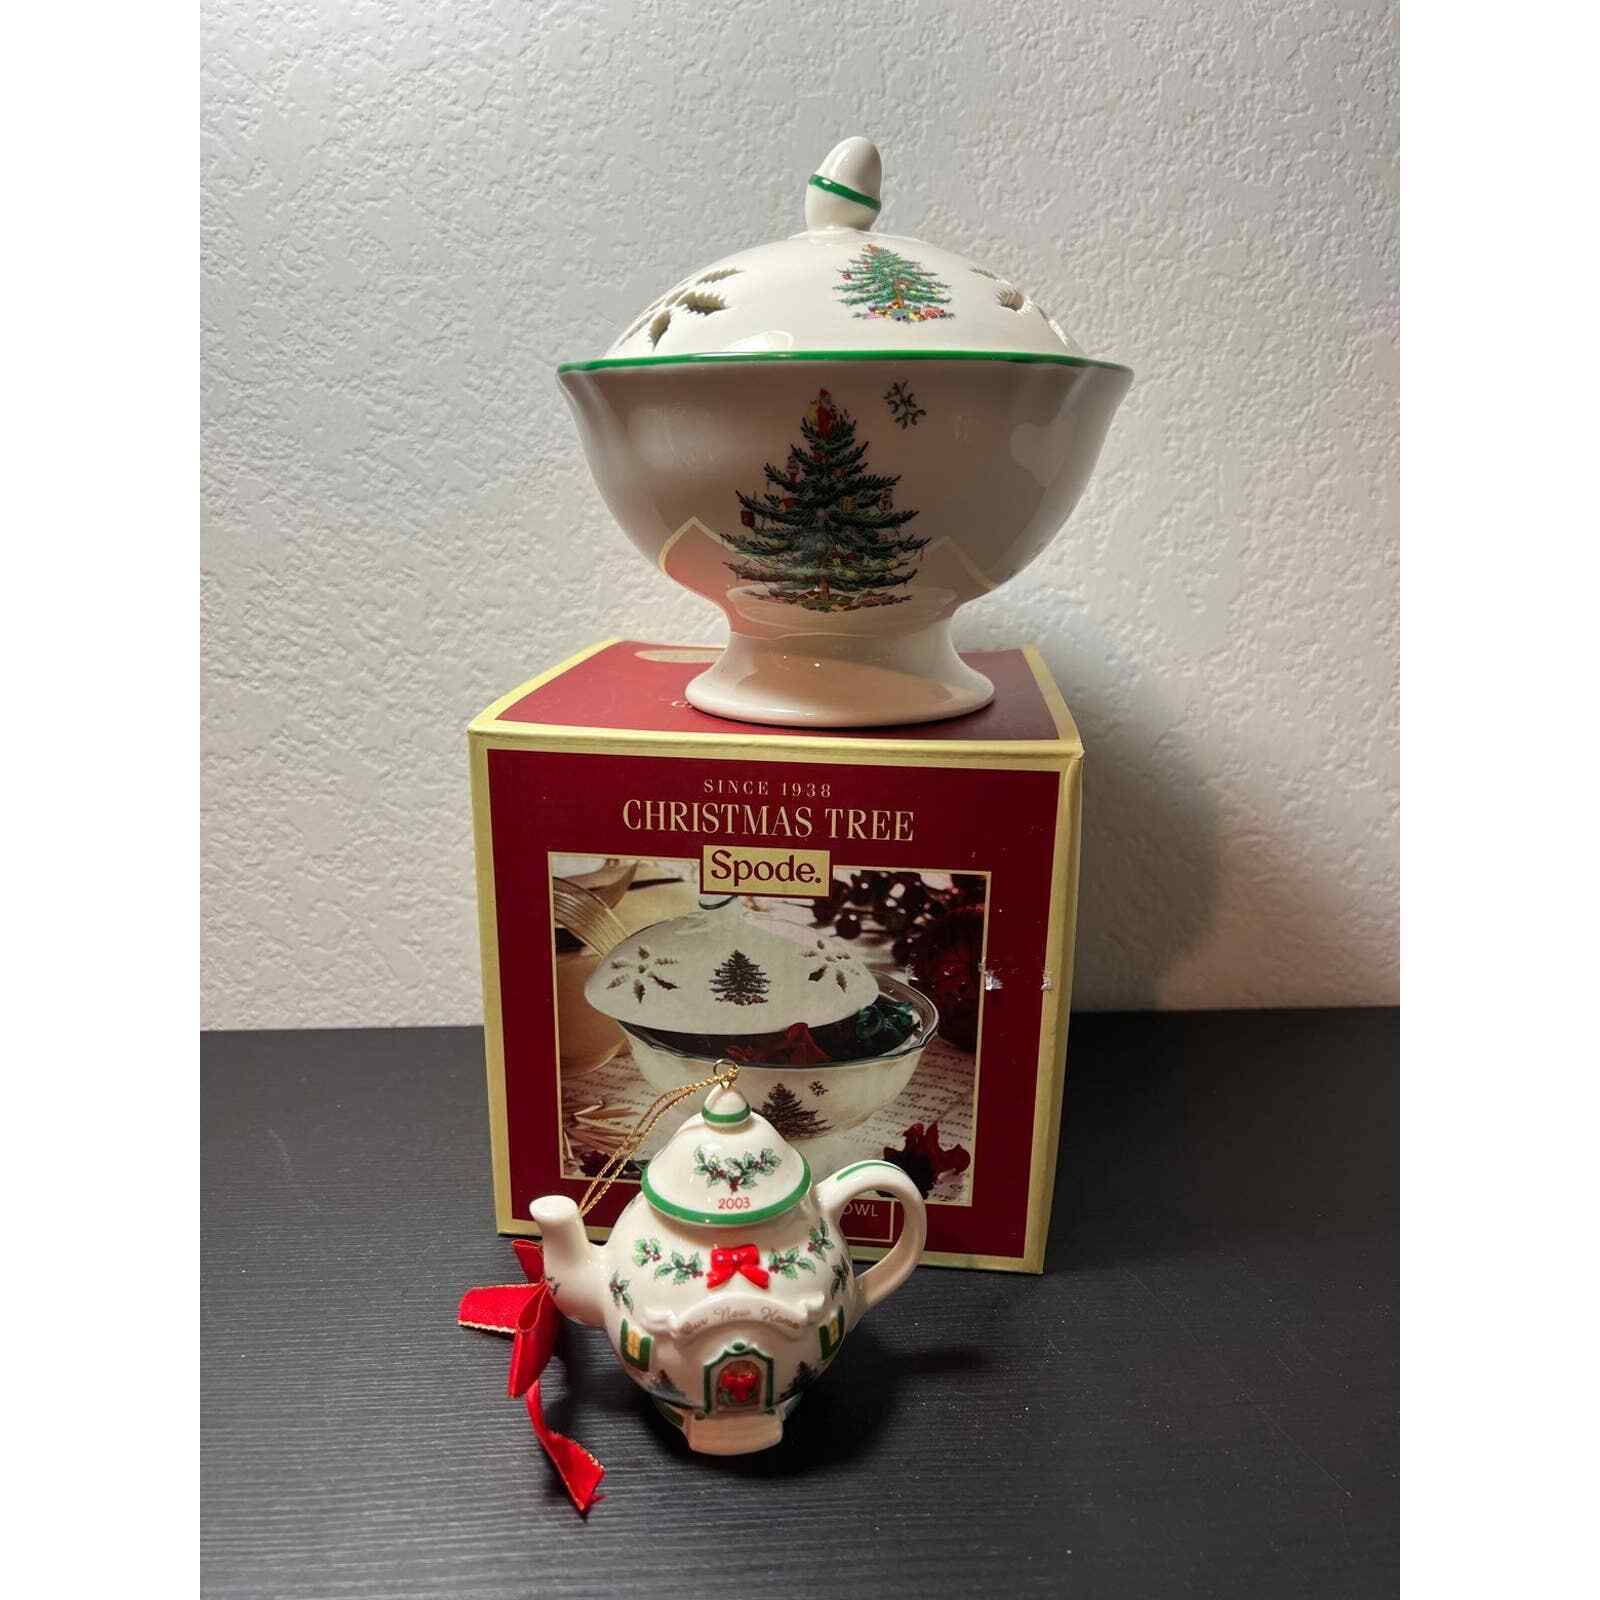 Spode Teapot Ornament Potpourri Bowl Christmas Tree Extra Holiday Decor - $27.12